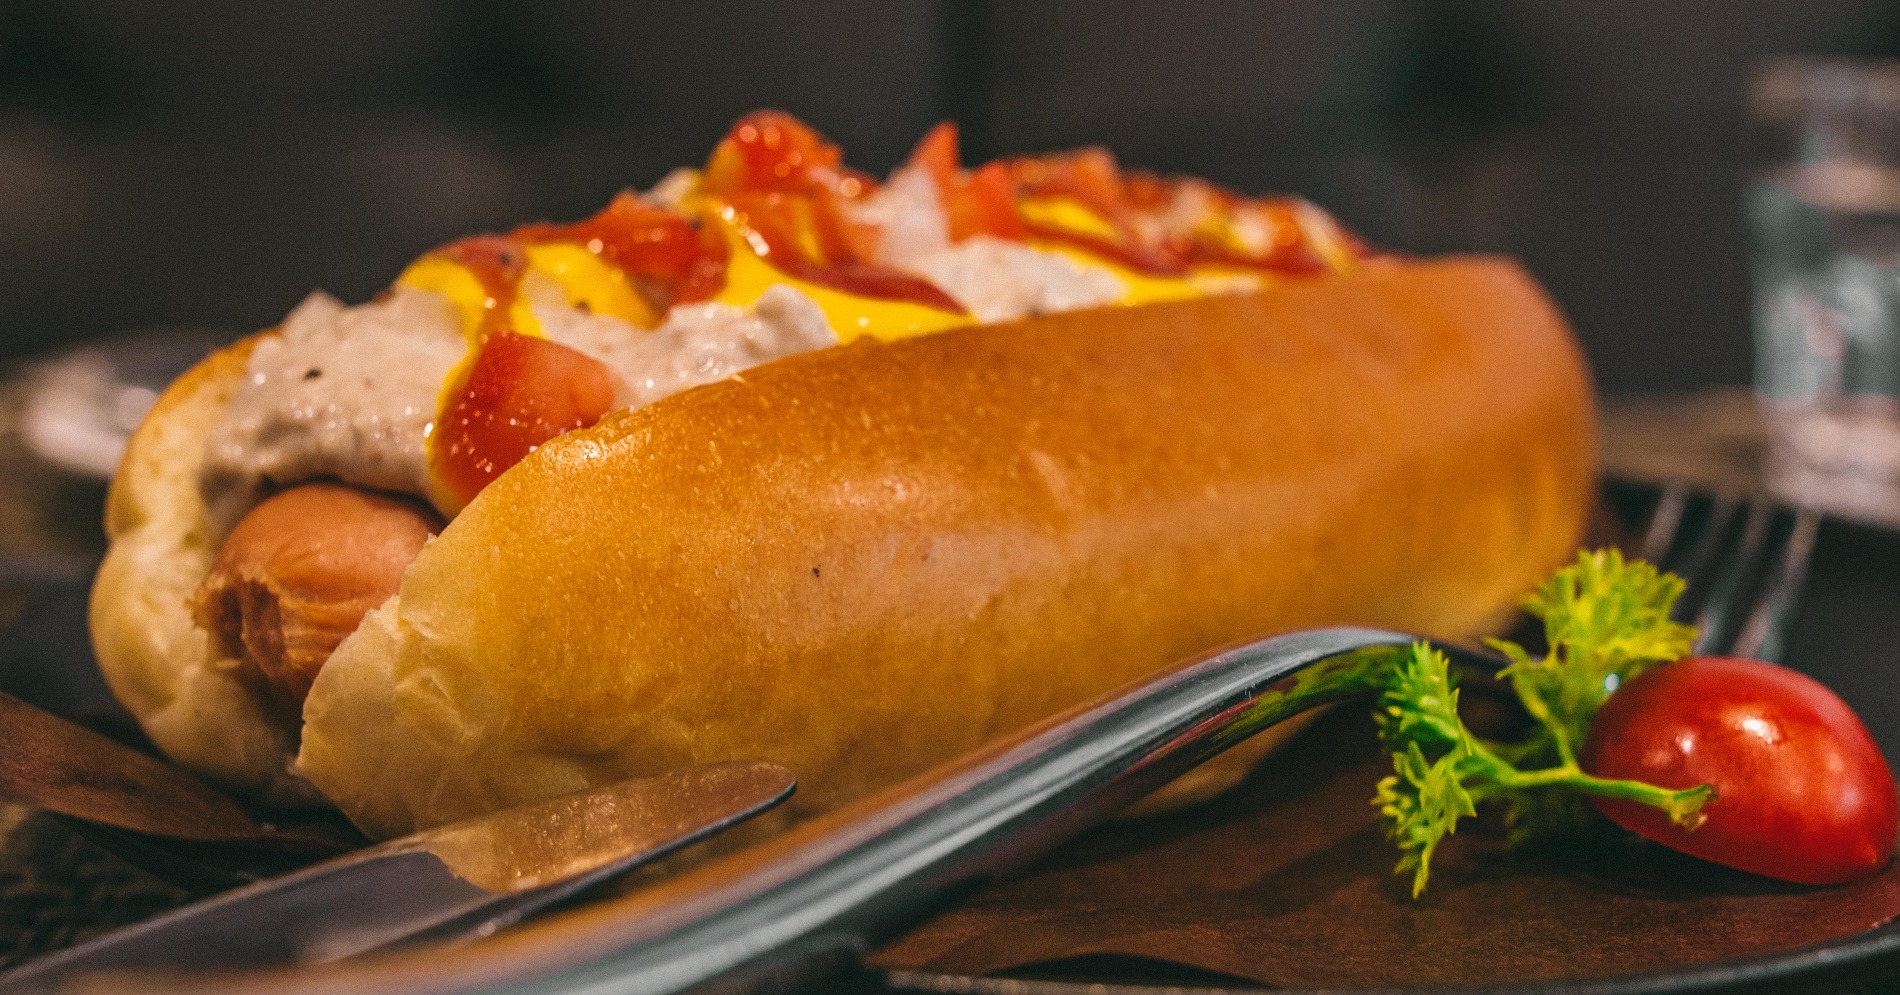 Hotdogs, salah satu olahan daging. (Sumber gambar: Yuhen Chen/Unsplash)